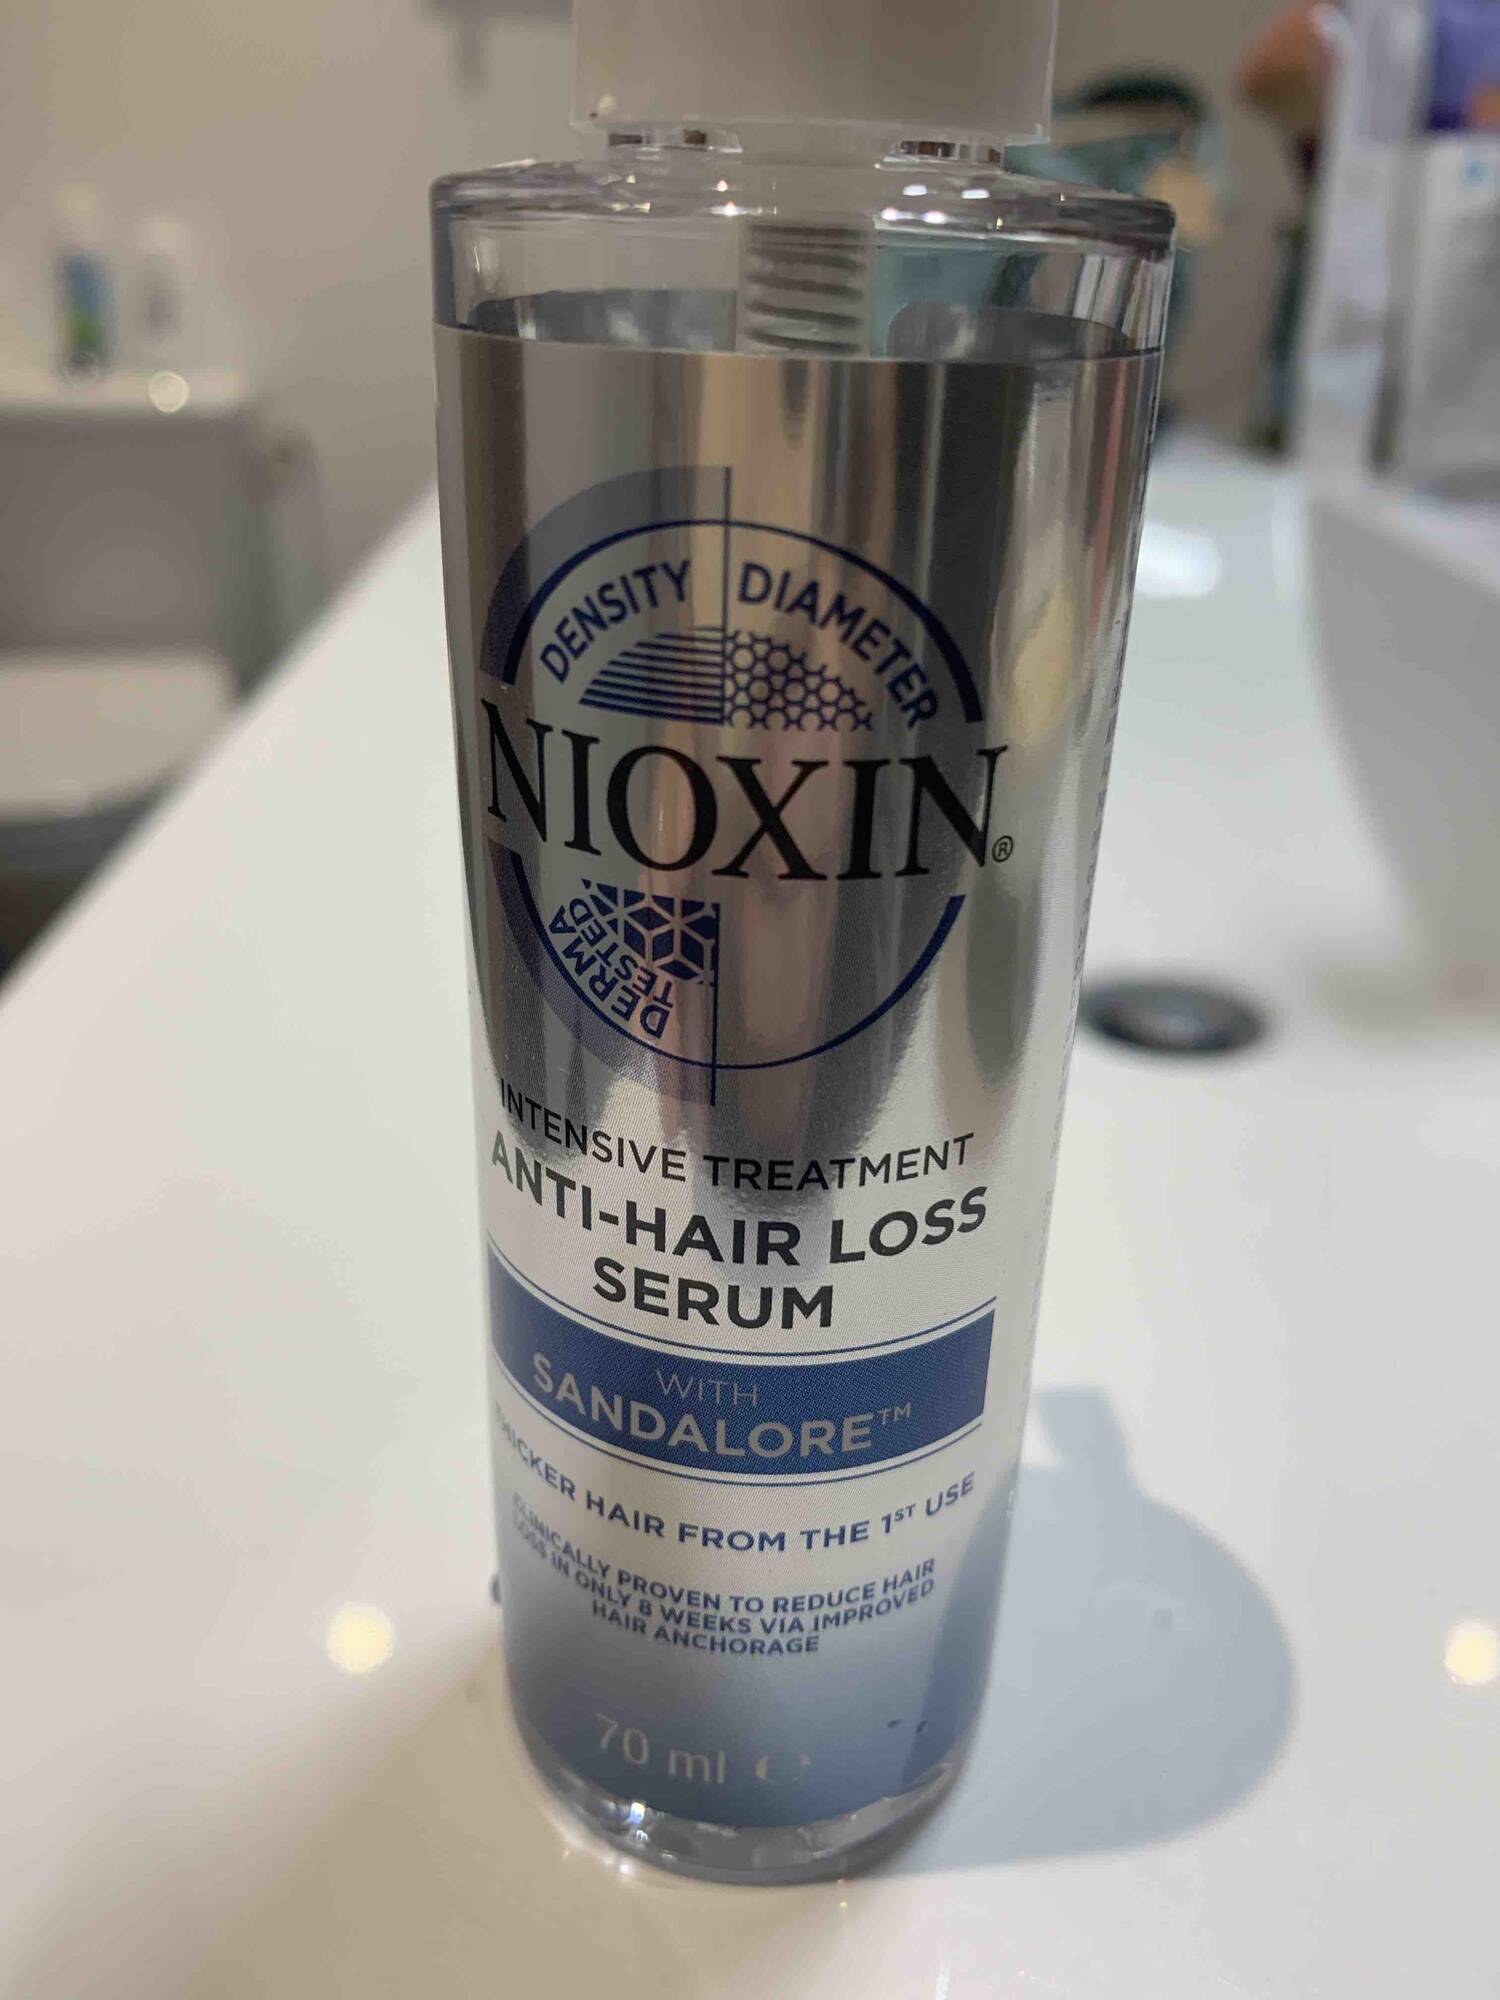 NIOXIN - Anti-hair loss serum with sandalore